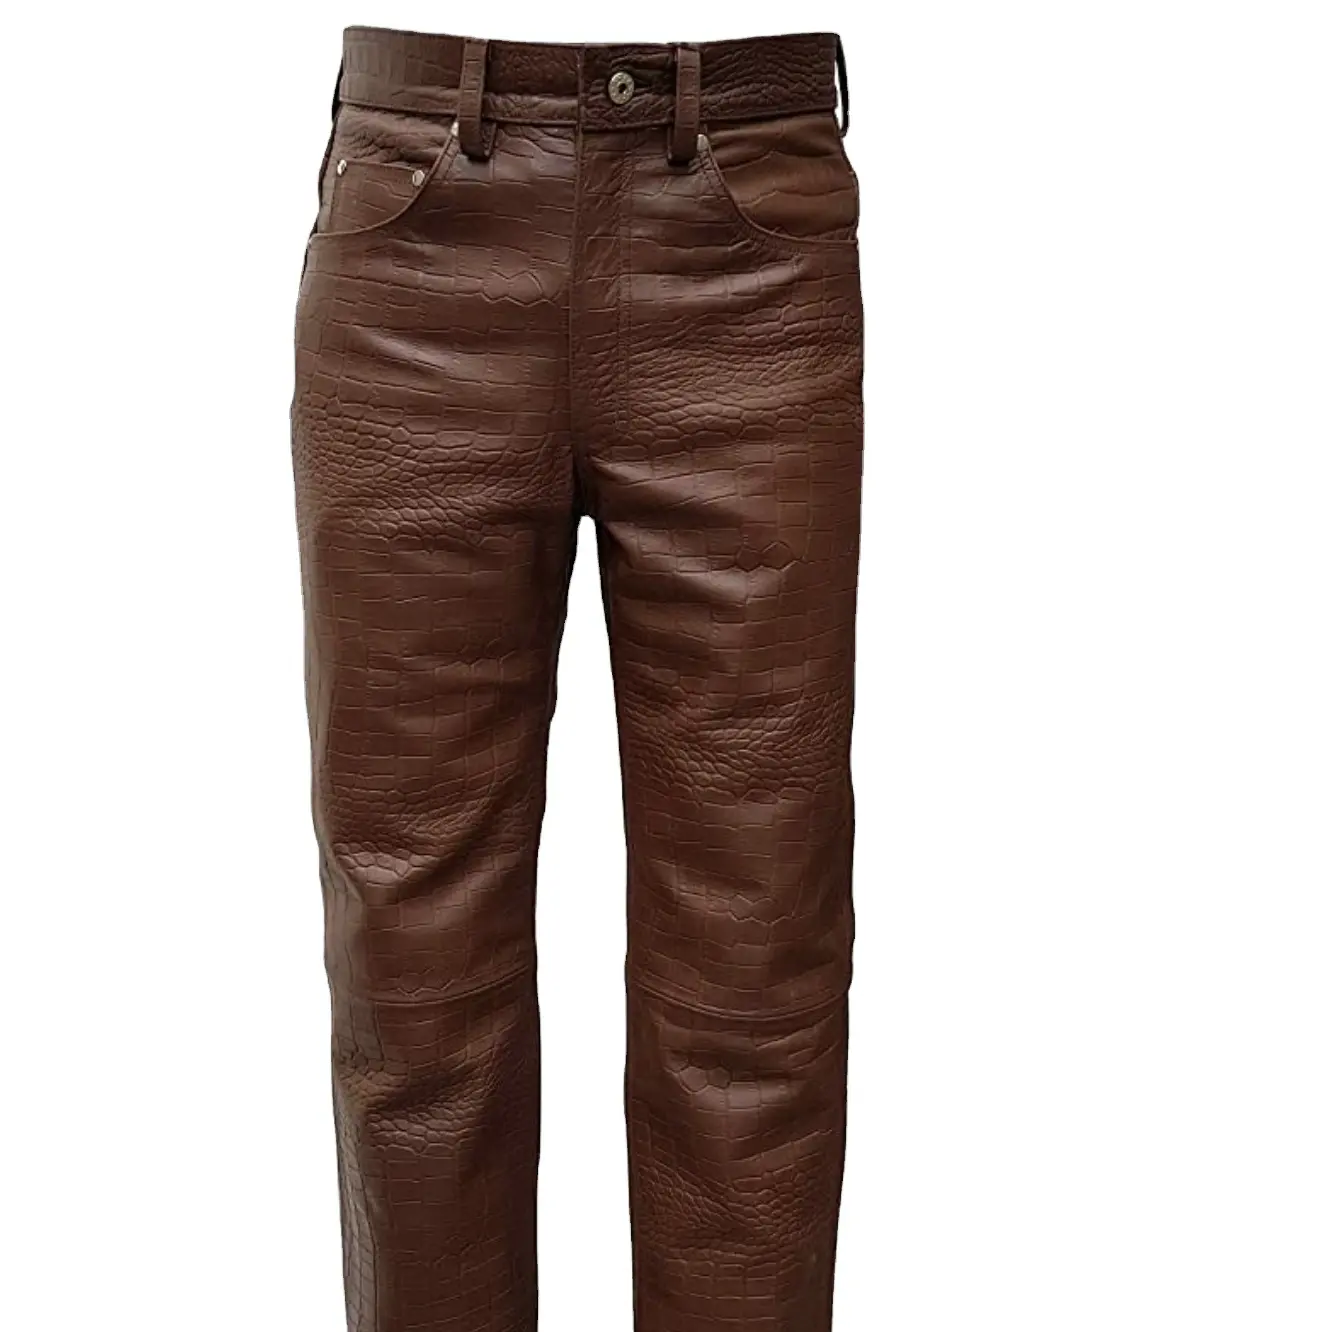 Celana panjang kulit buaya untuk pria, celana panjang Jin gaya 501 kulit motif buaya warna coklat asli, celana kulit klub pengendara sepeda motor